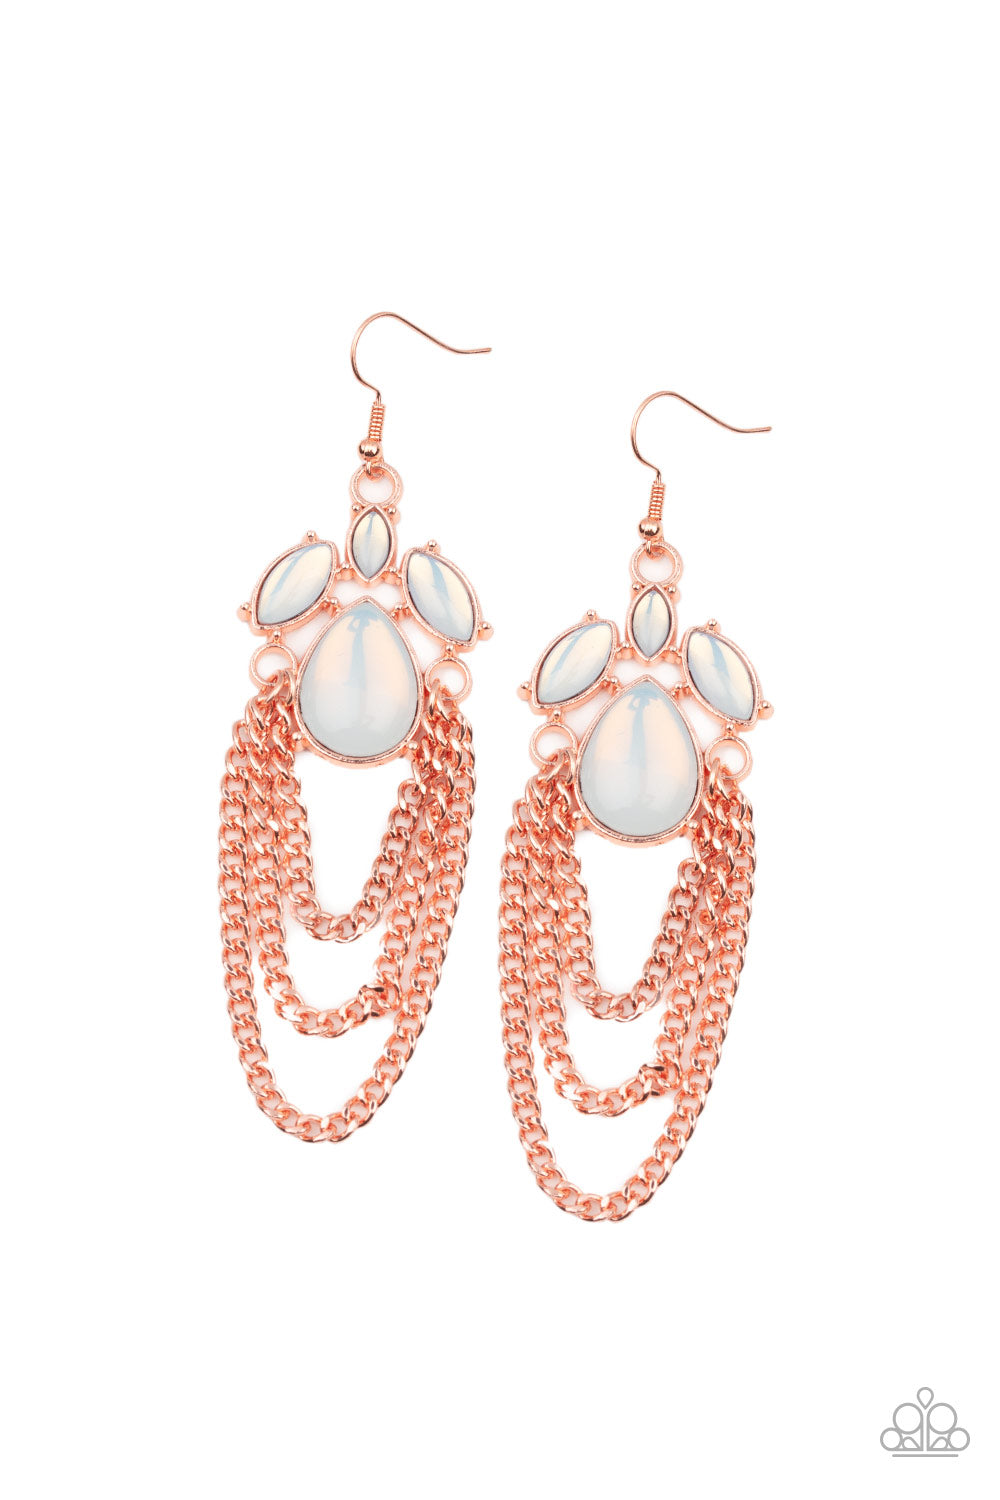 Opalescence Essence - Copper Earrings - Princess Glam Shop